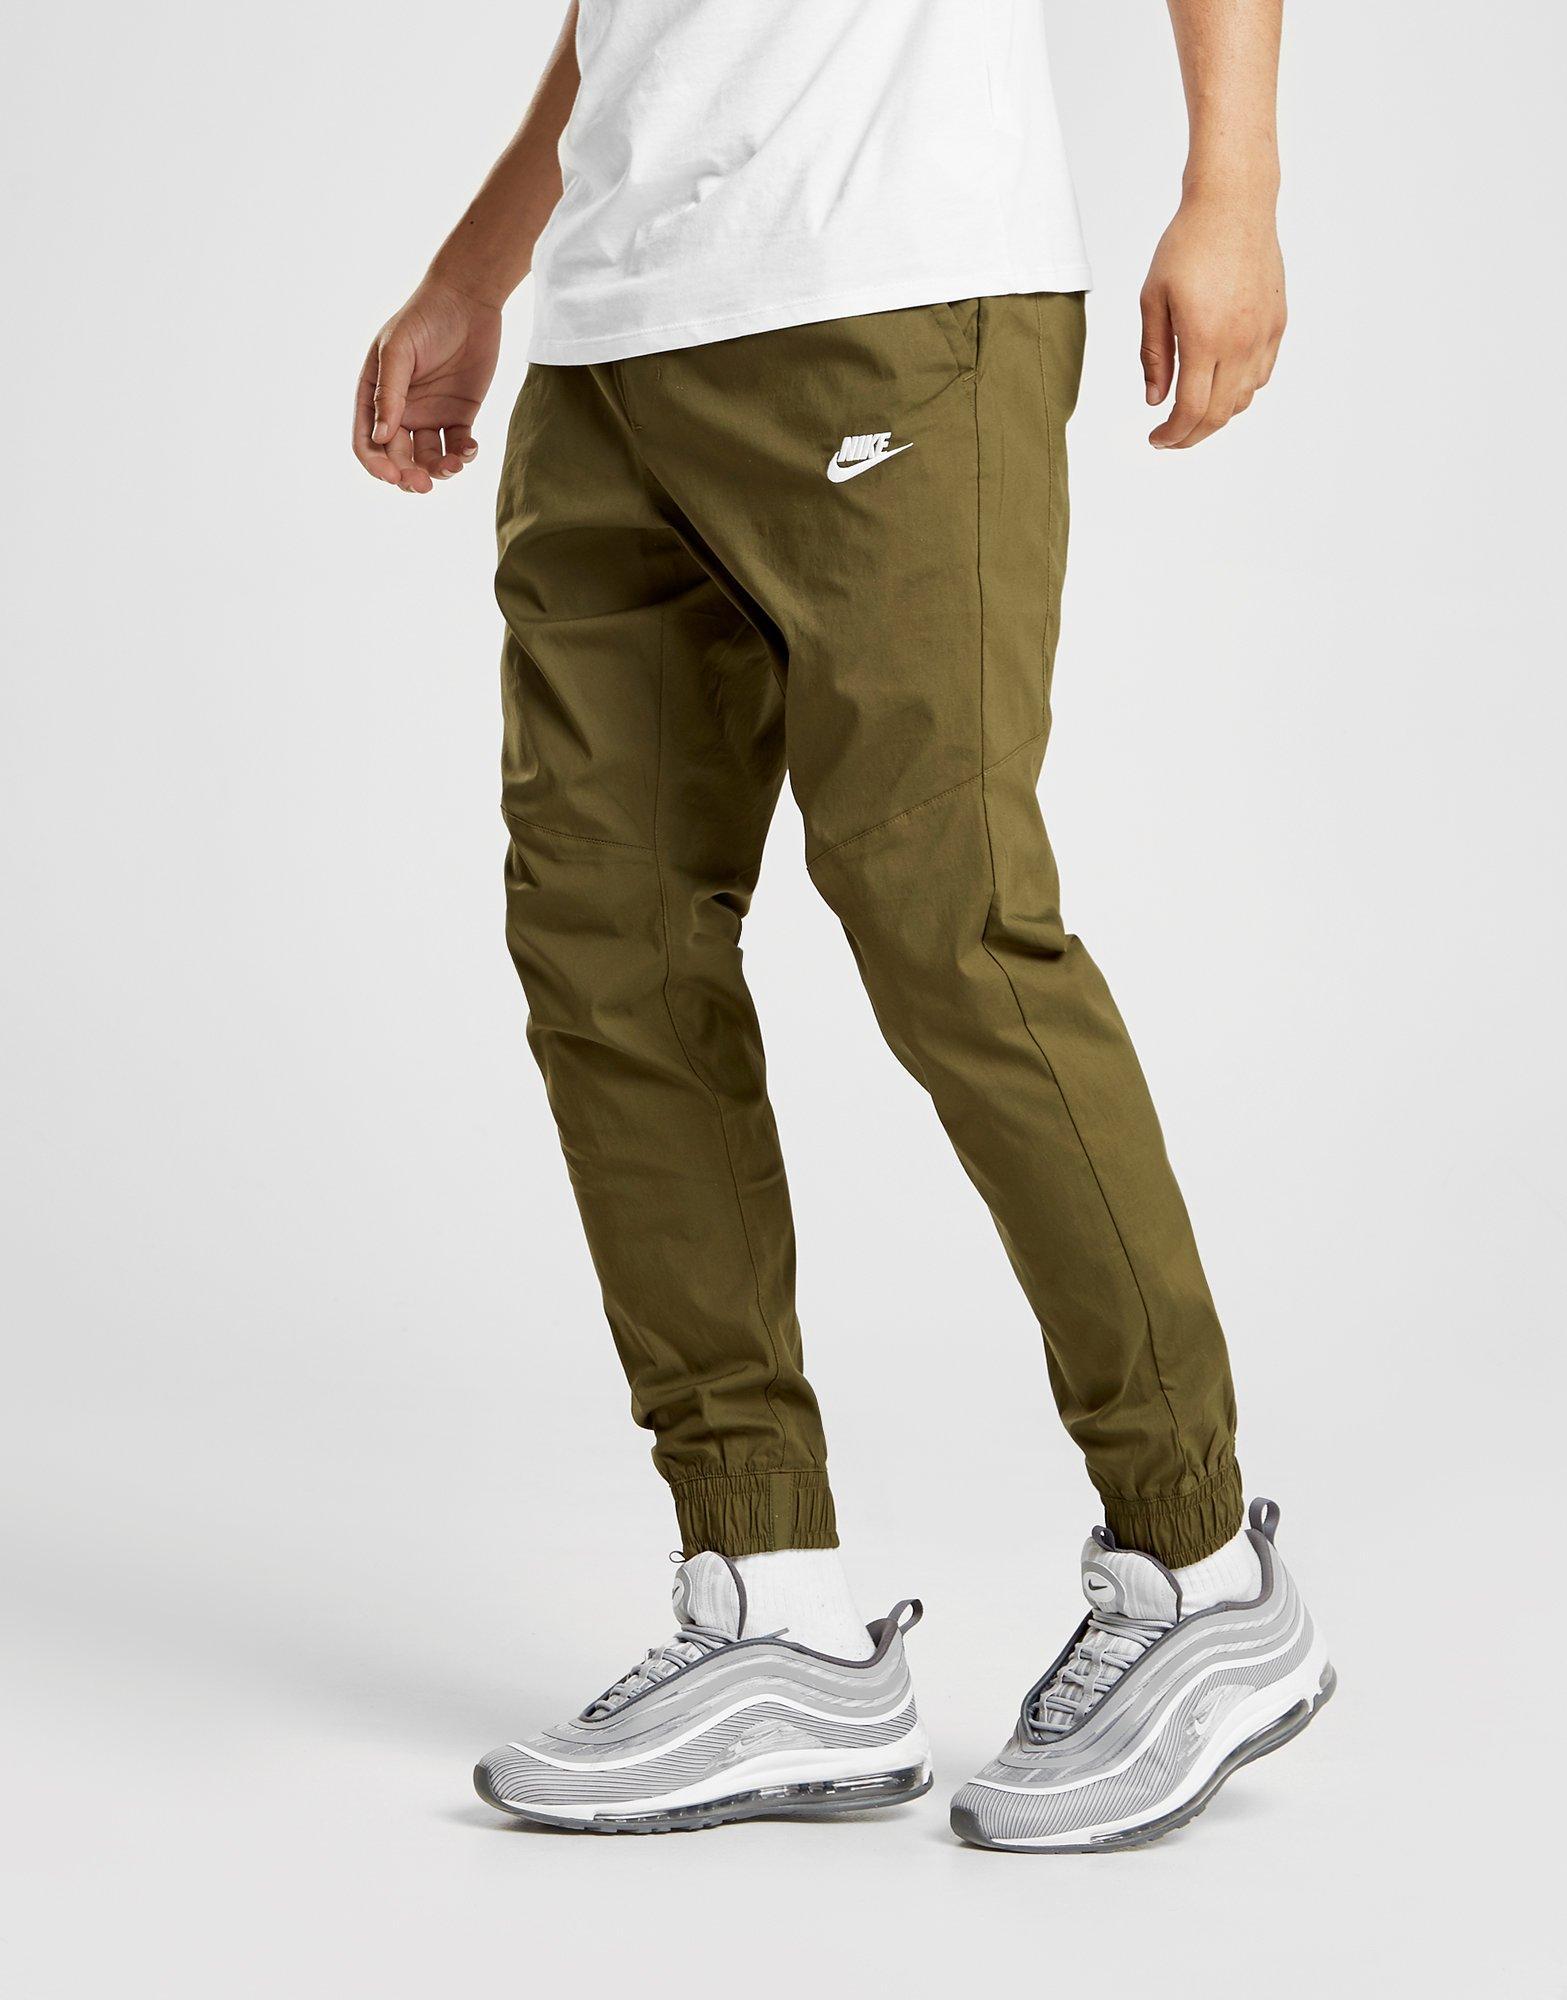 nike army green pants 